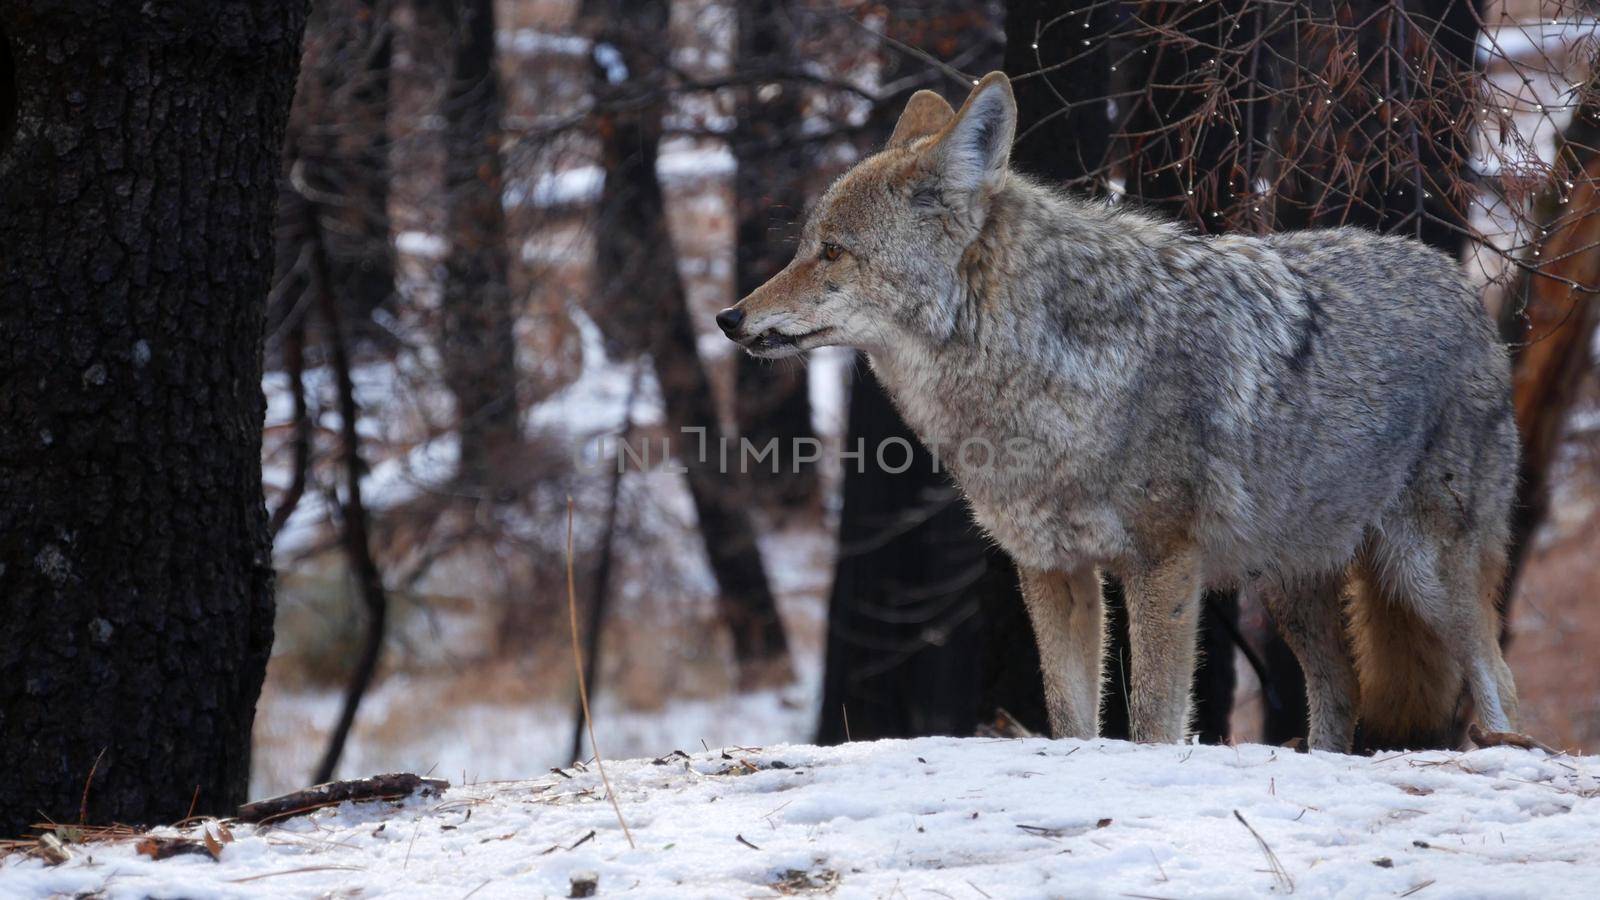 Wild furry wolf, gray coyote or grey coywolf, winter snowy forest, Yosemite national park wildlife, California fauna, USA. Undomesticated predator walking and sniffing, hybrid dog like animal standing